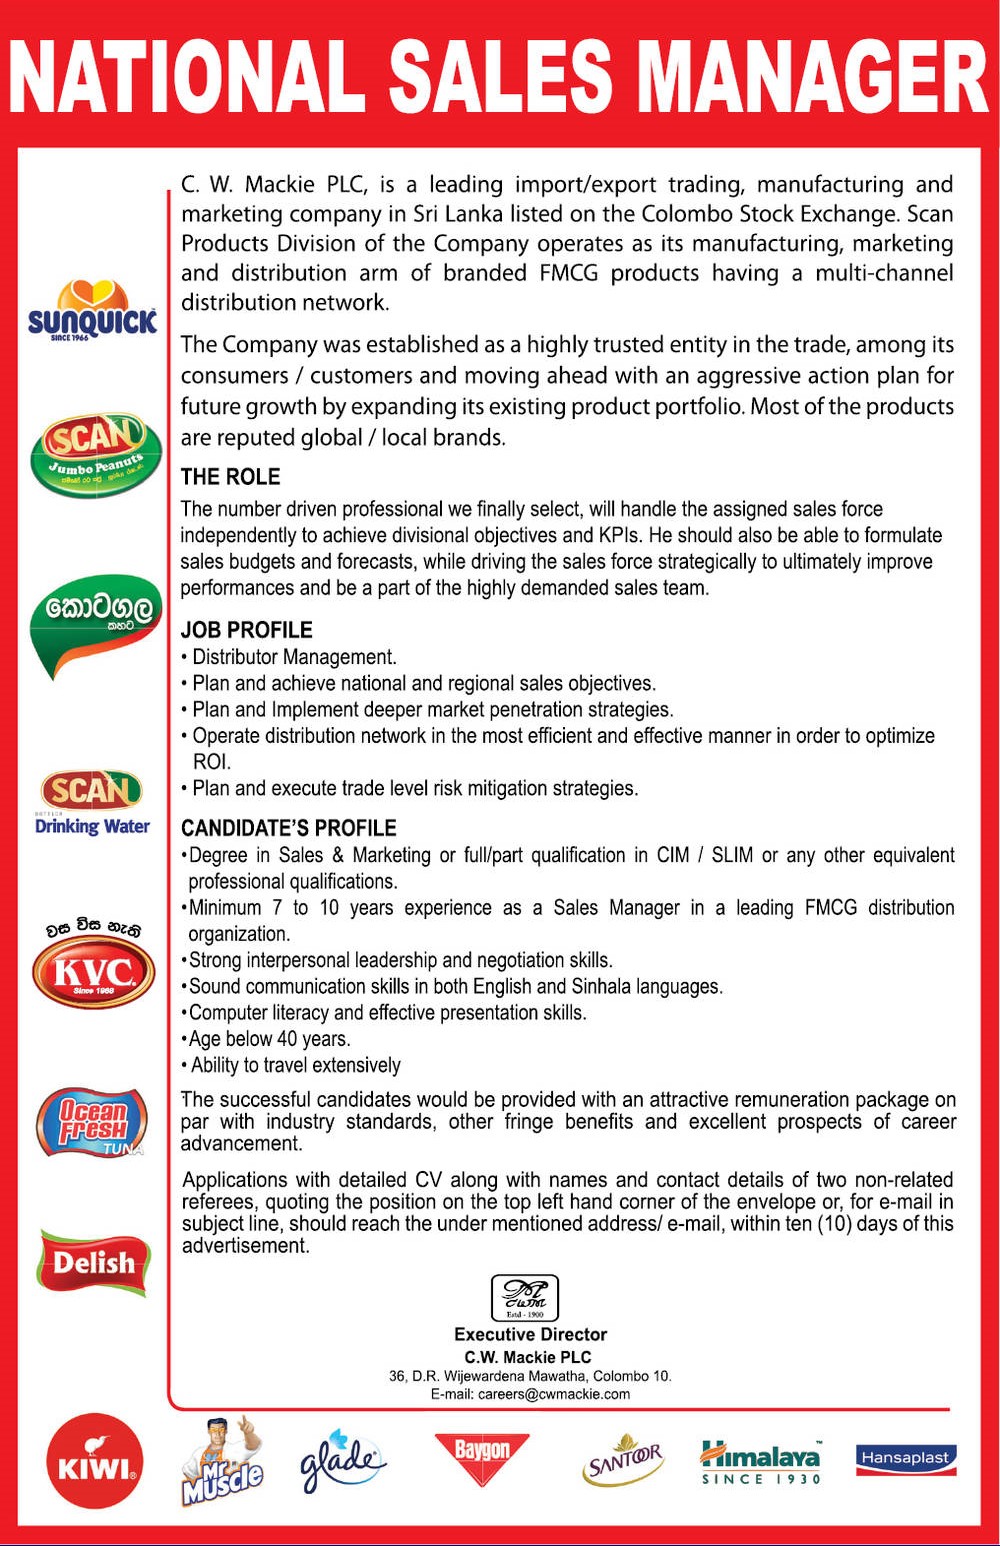 National Sales Manager Job Vacancy - C W Mackie PLC Jobs Vacancies Details